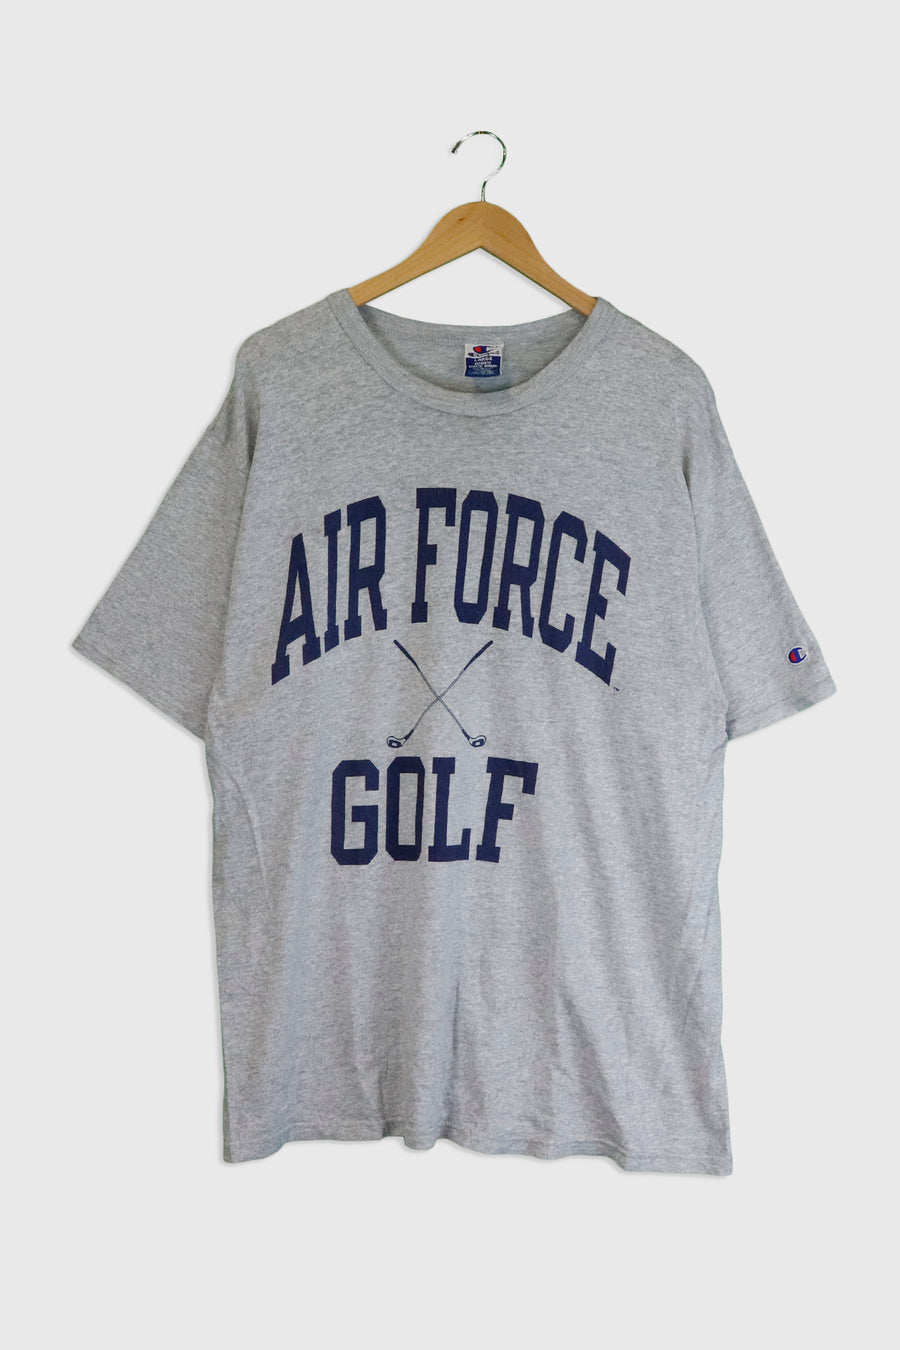 Vintage Champion Air Force Golf T Shirt Sz L